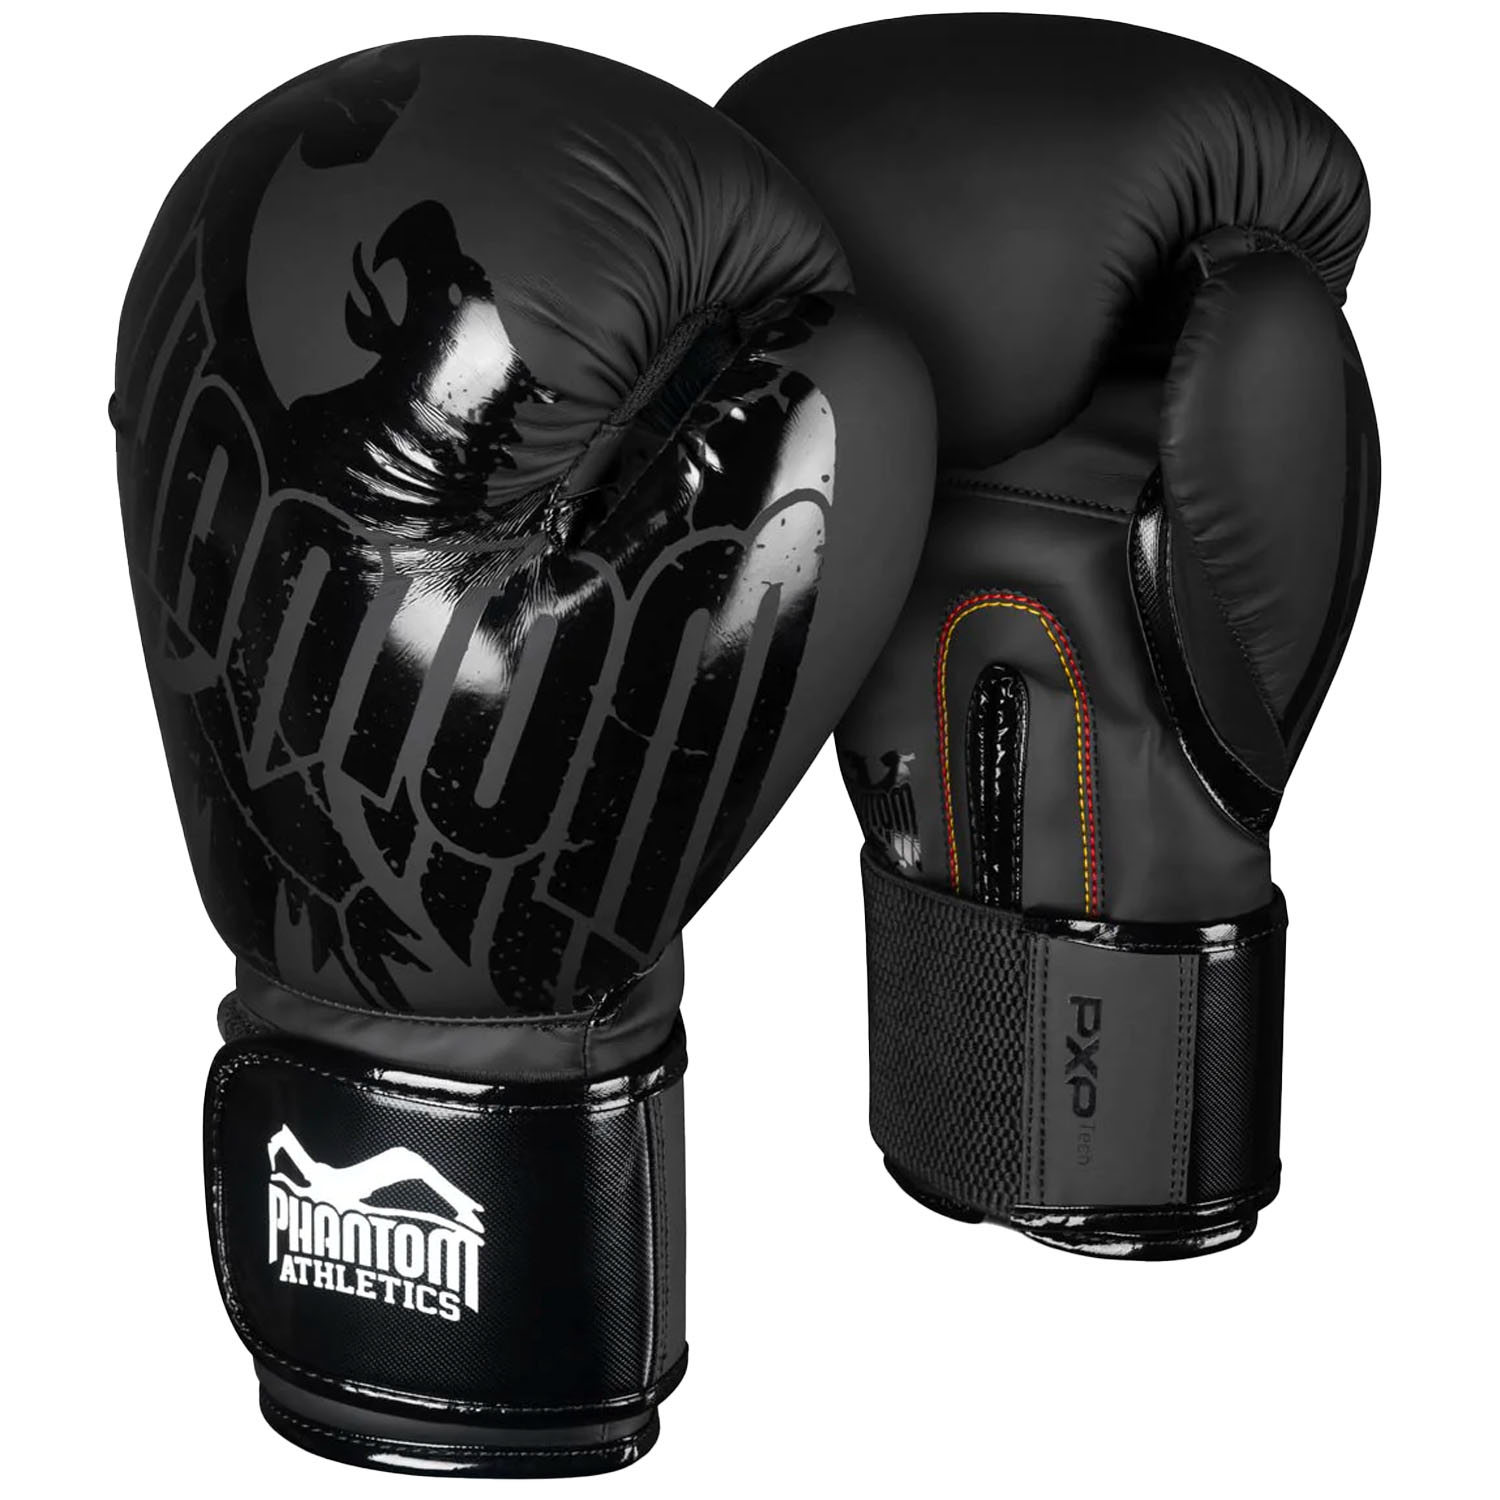 Phantom Athletics Boxing Gloves, German Eagle, black, 16 Oz